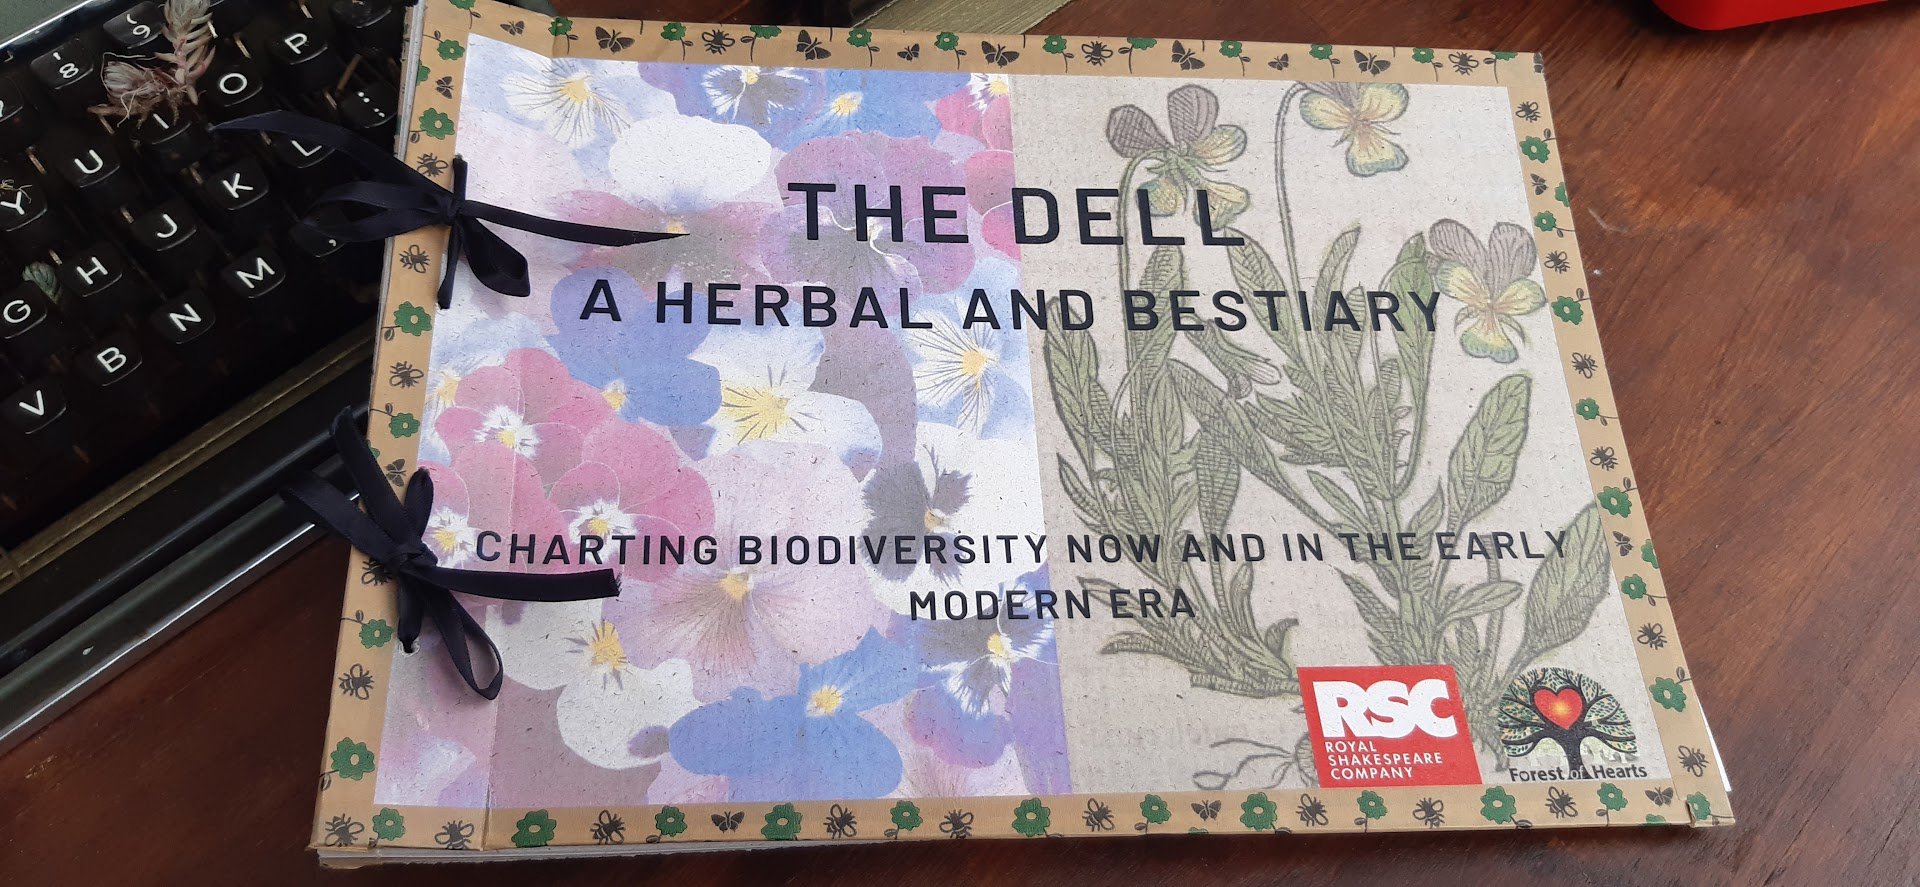 The Dell Biodiversity book.jpg